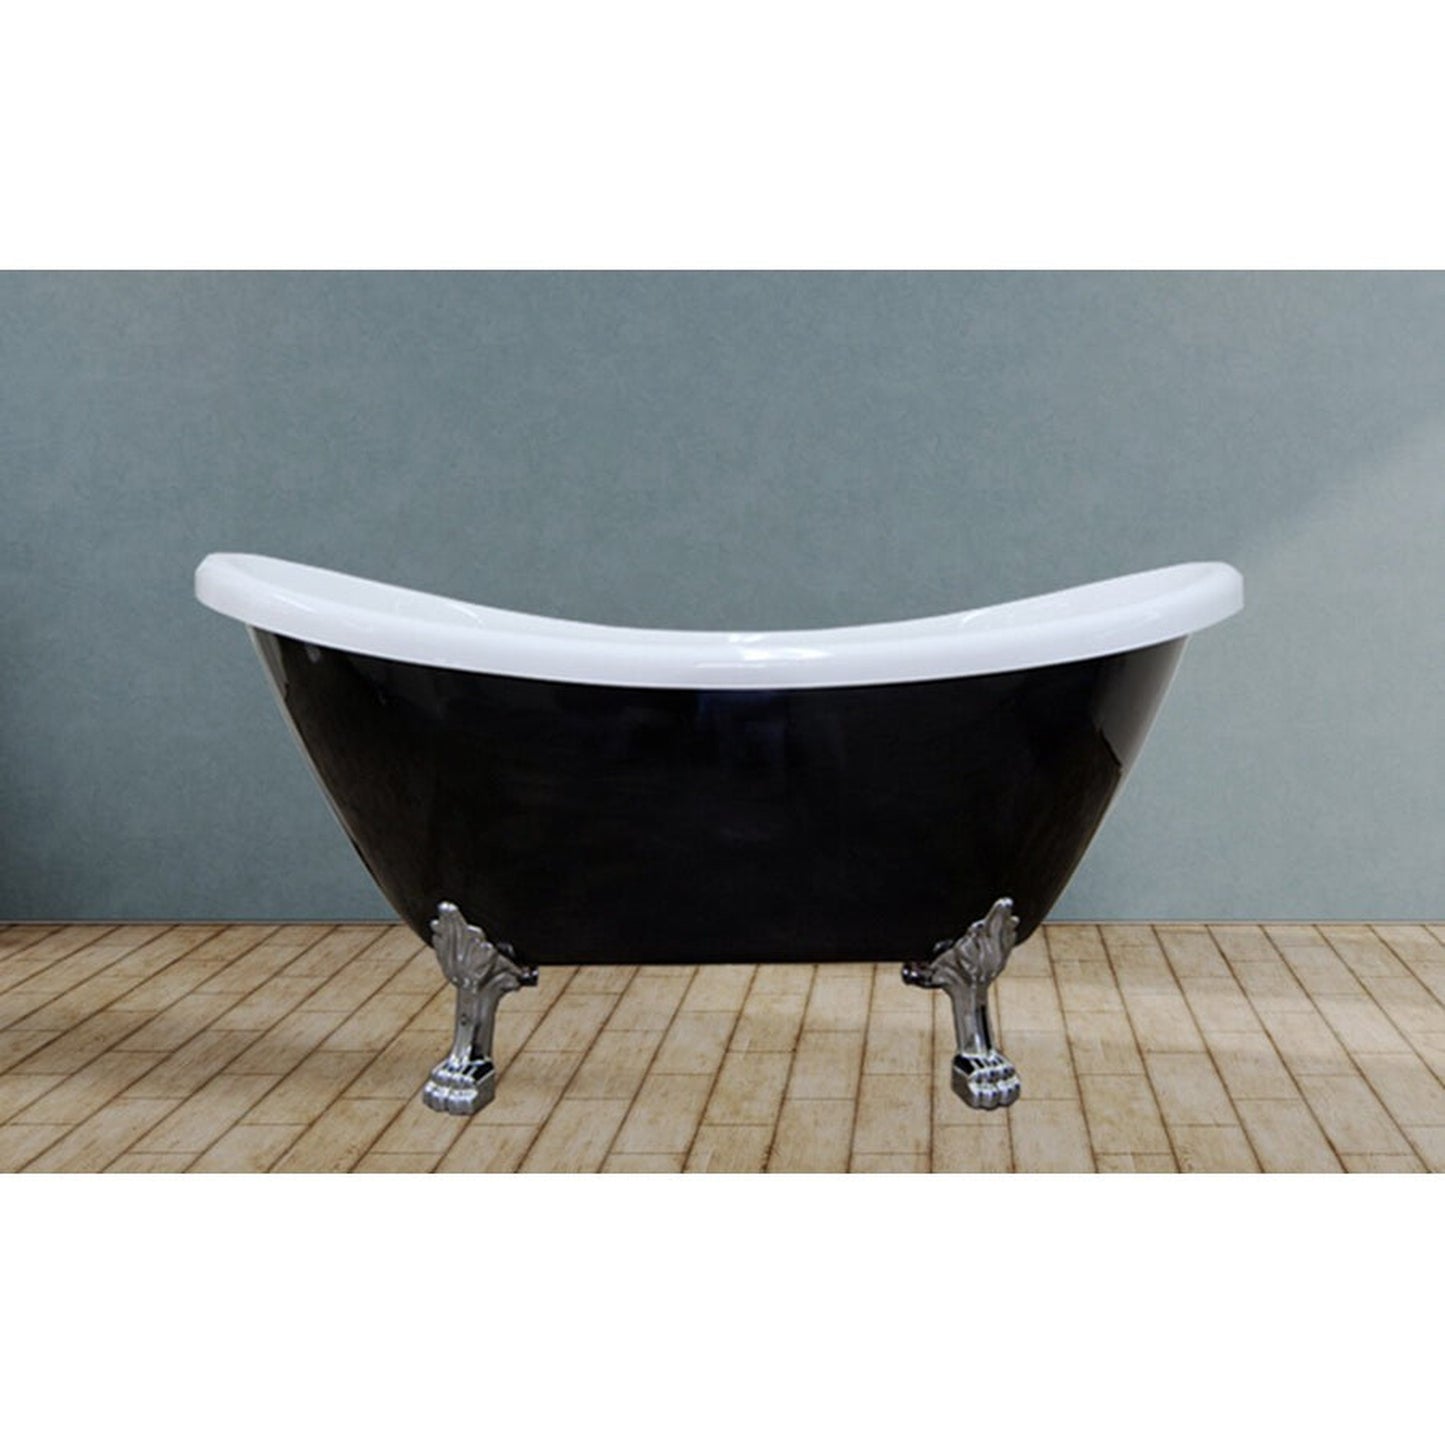 Castello USA Daphne 60" Black Acrylic Freestanding Bathtub With Chrome Feet and Drain